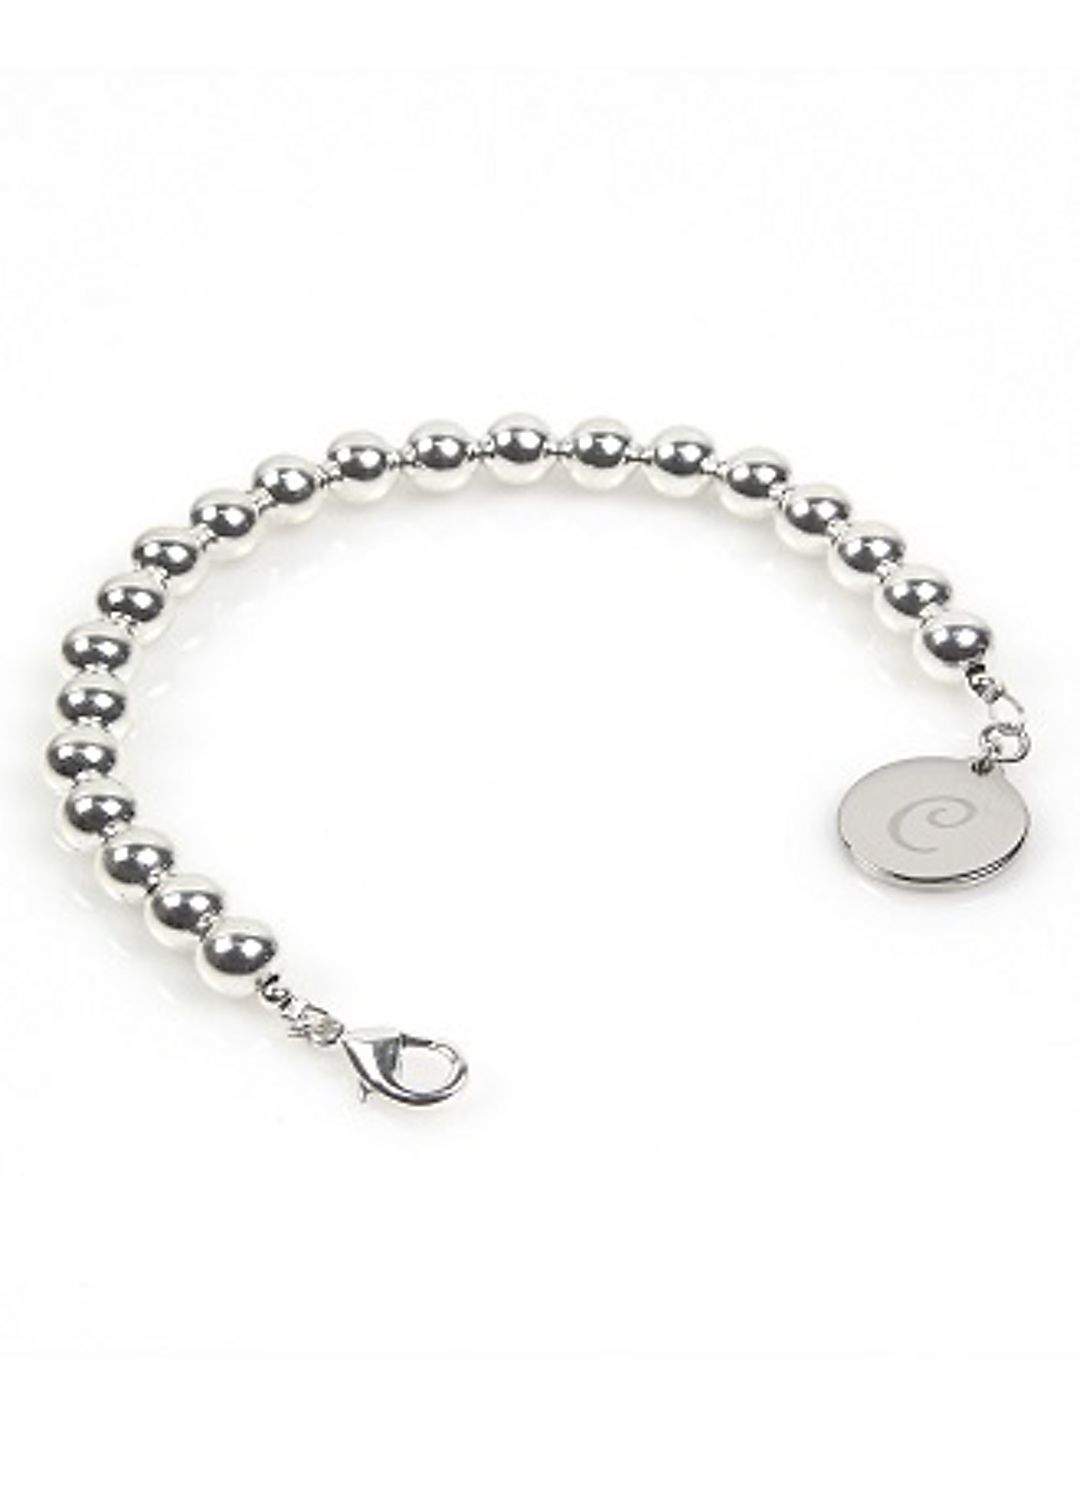 Personalized Silver Bead Bracelet Image 3